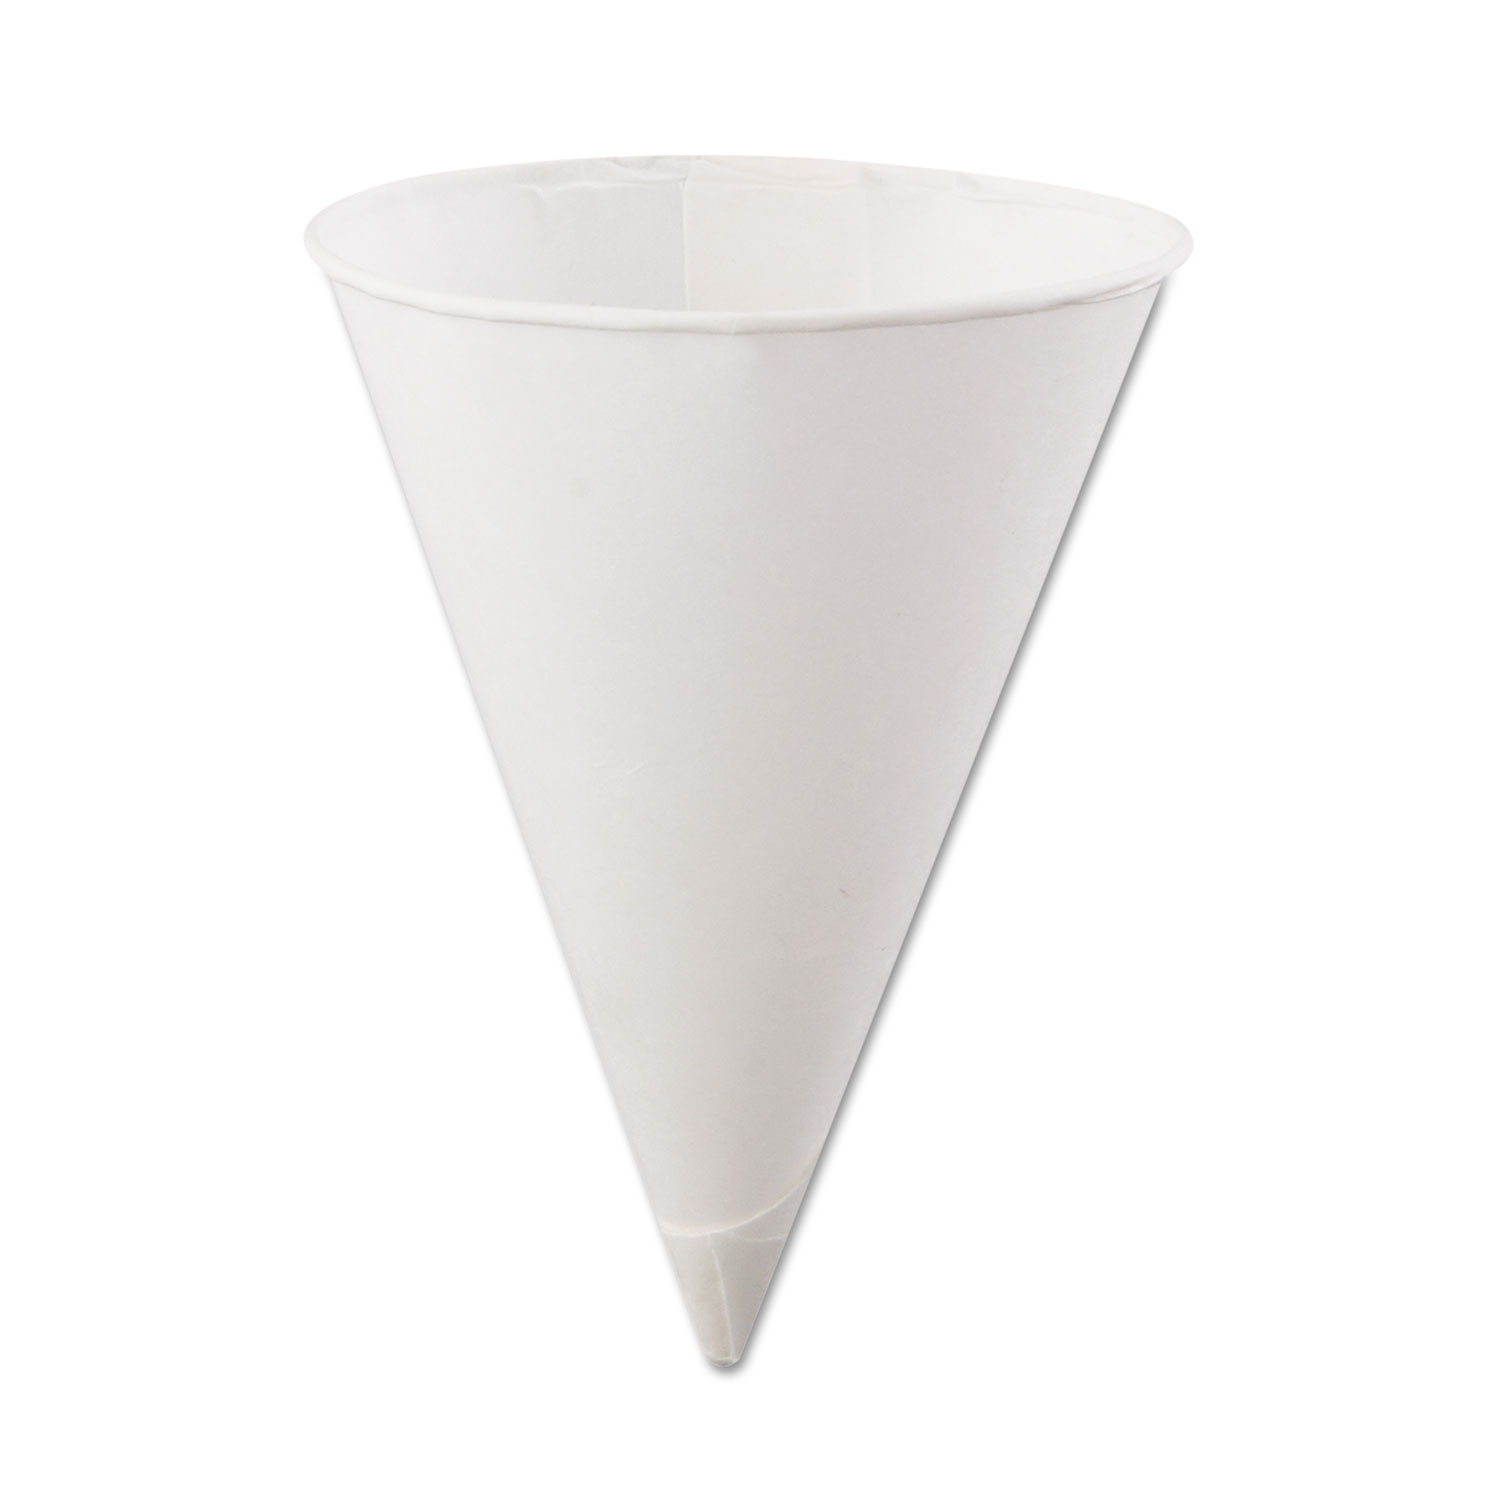  Konie KCI 4.5KR Rolled Rim Paper Cone Cups, 4.5oz, White, 200/Bag, 25 Bags/Carton (KCI45KR) 